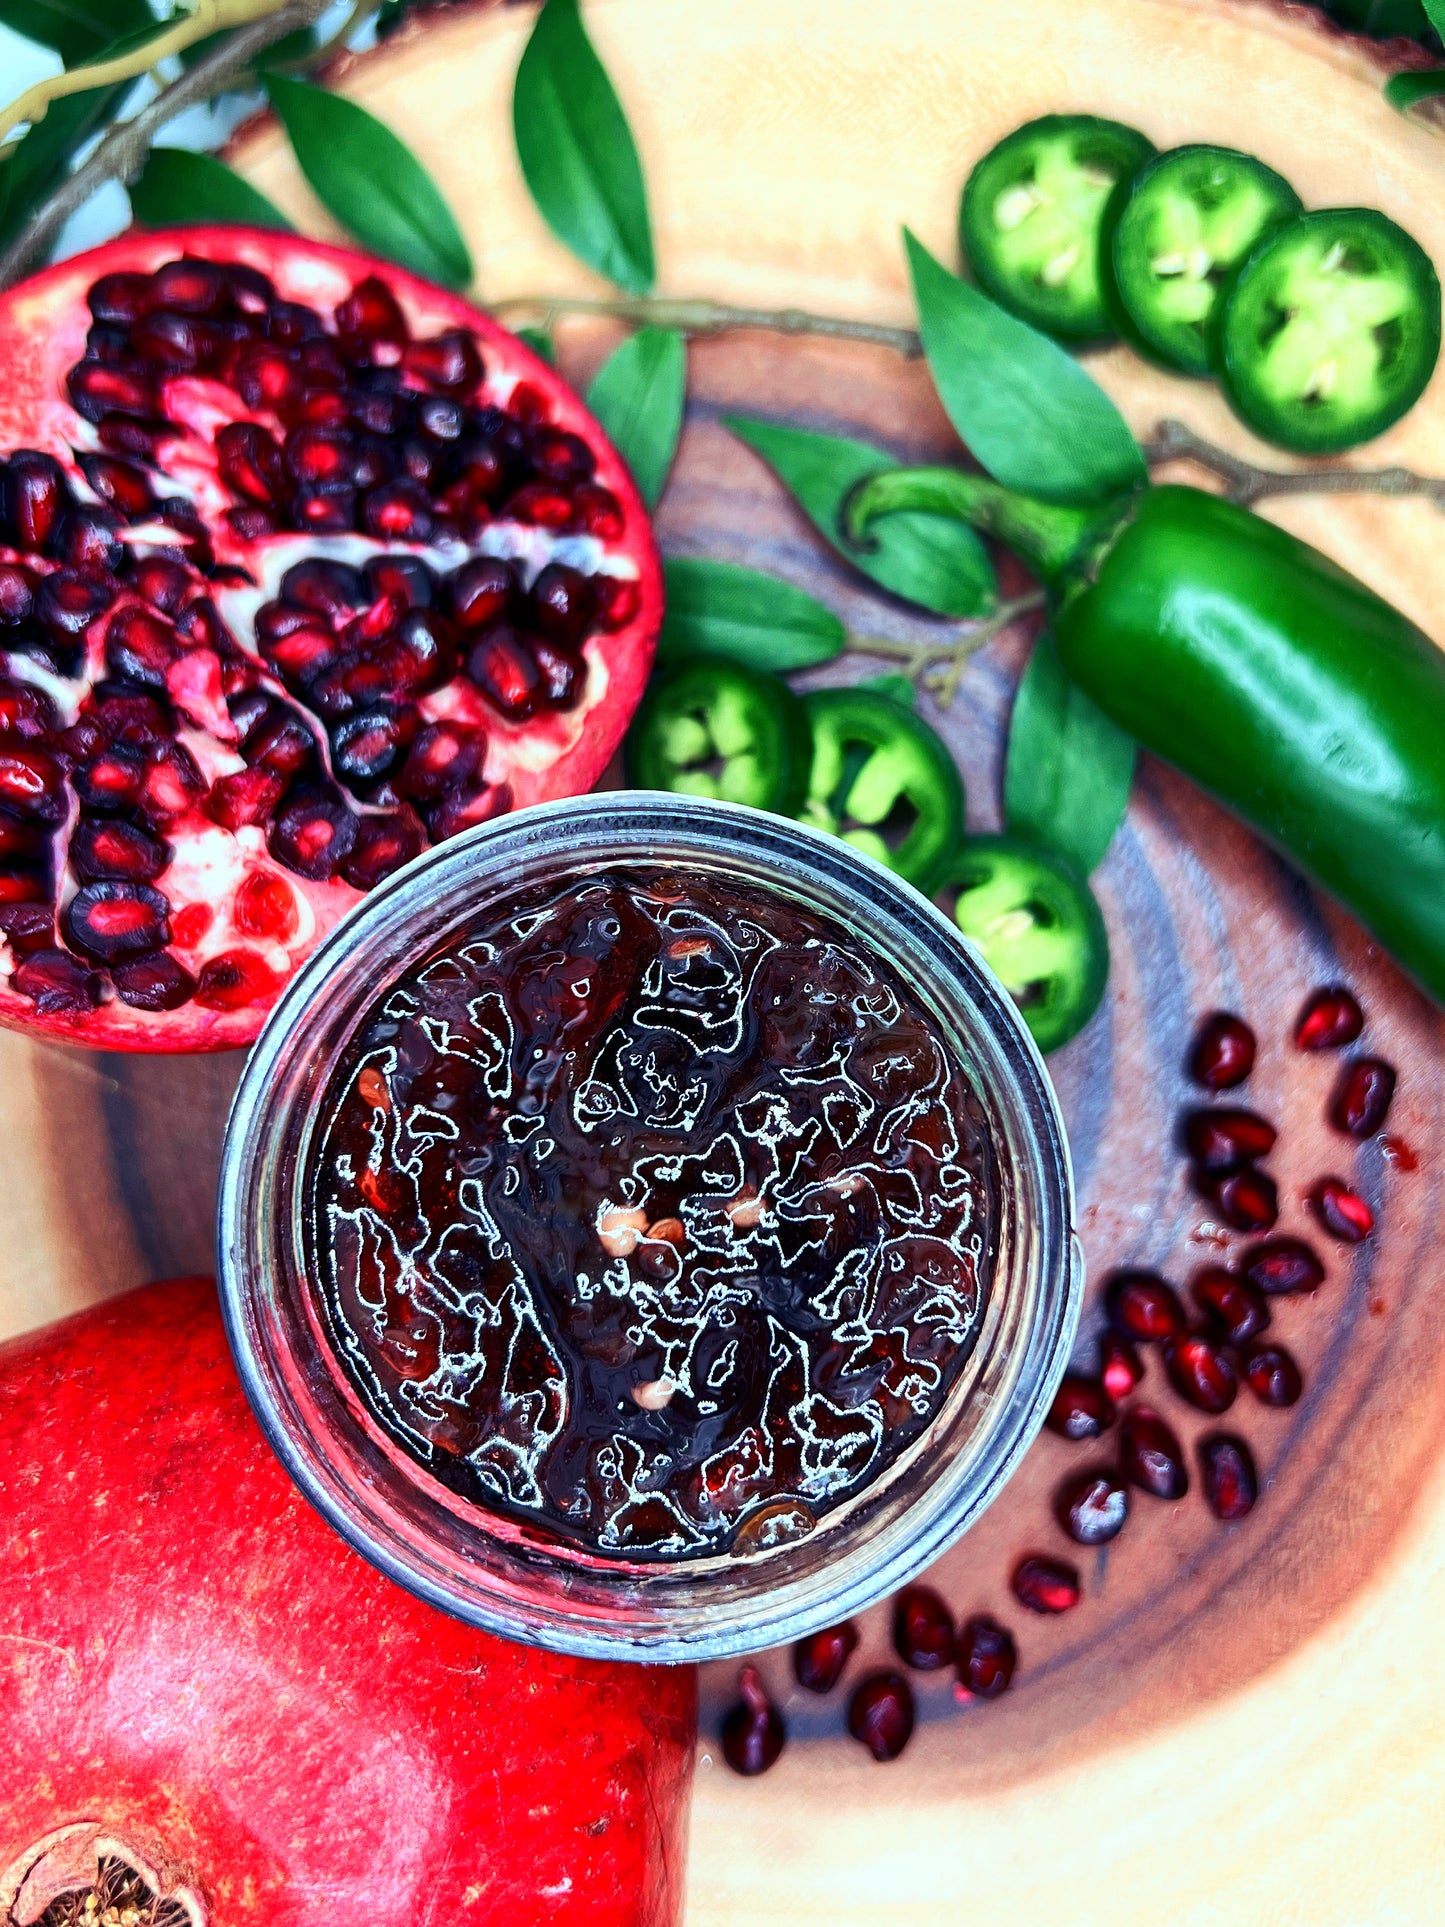 Pomegranate Jalapeño Jelly: A Unique Spicy Jam